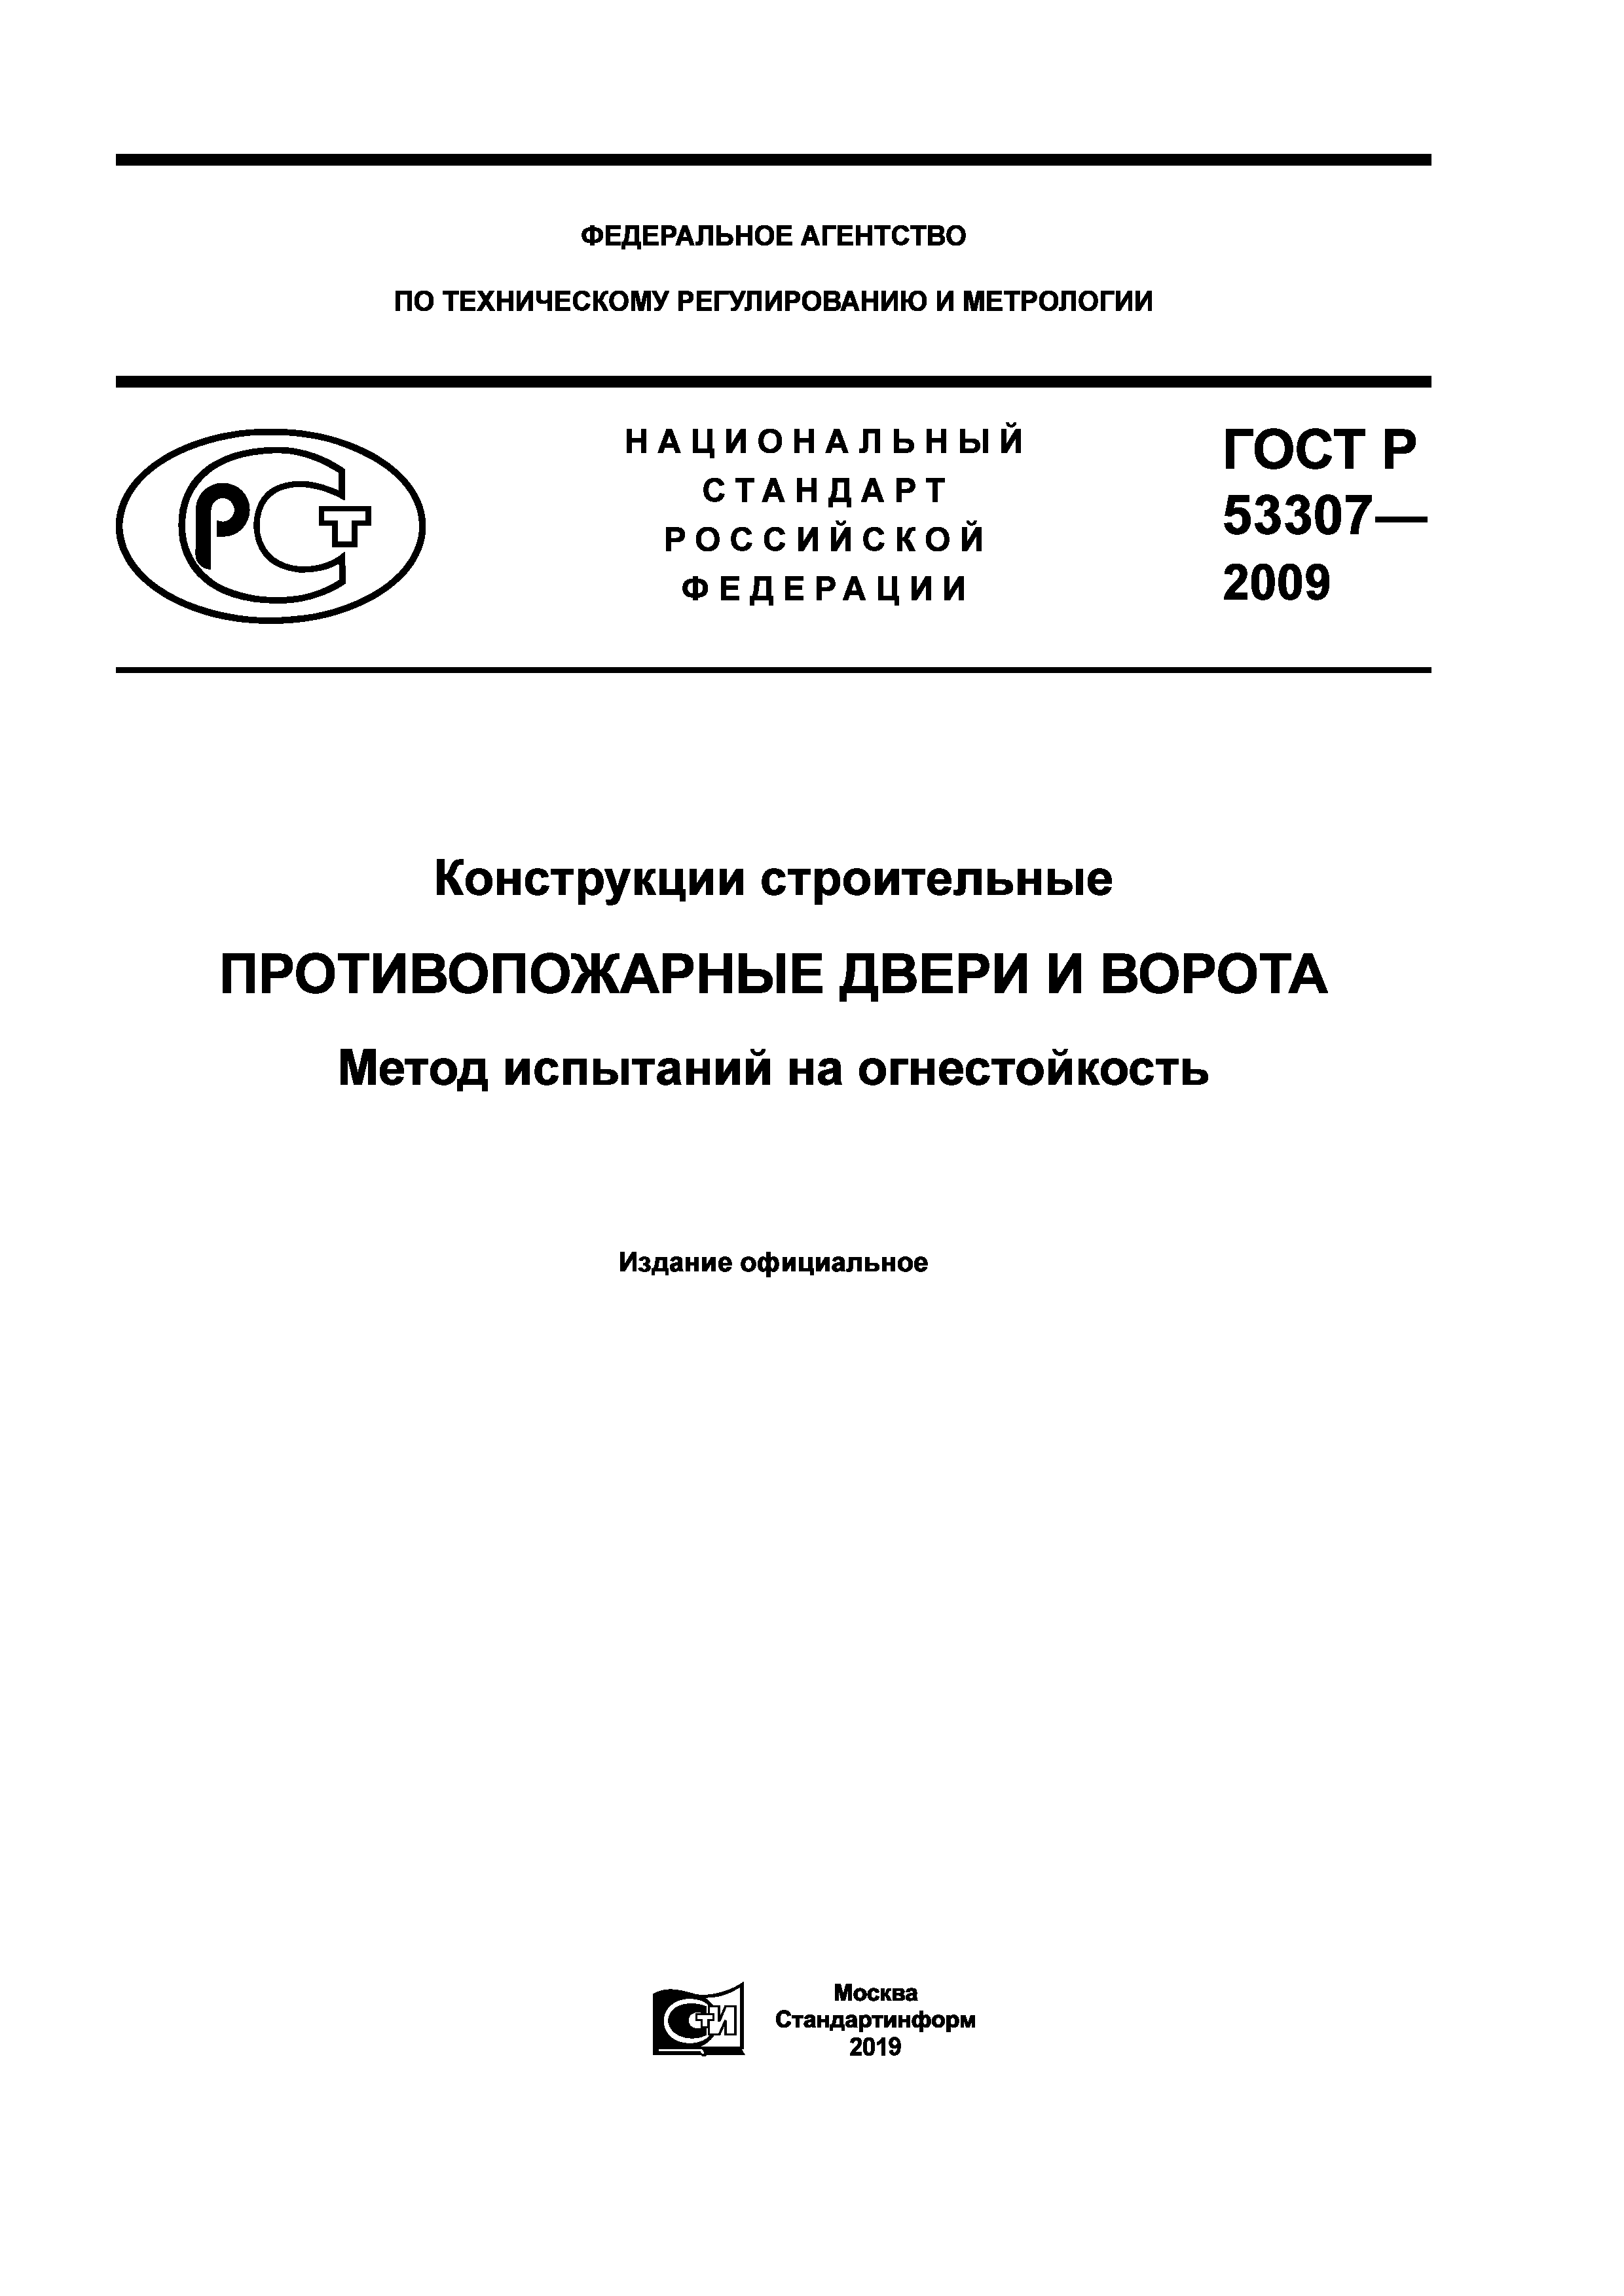 ГОСТ Р 53307-2009